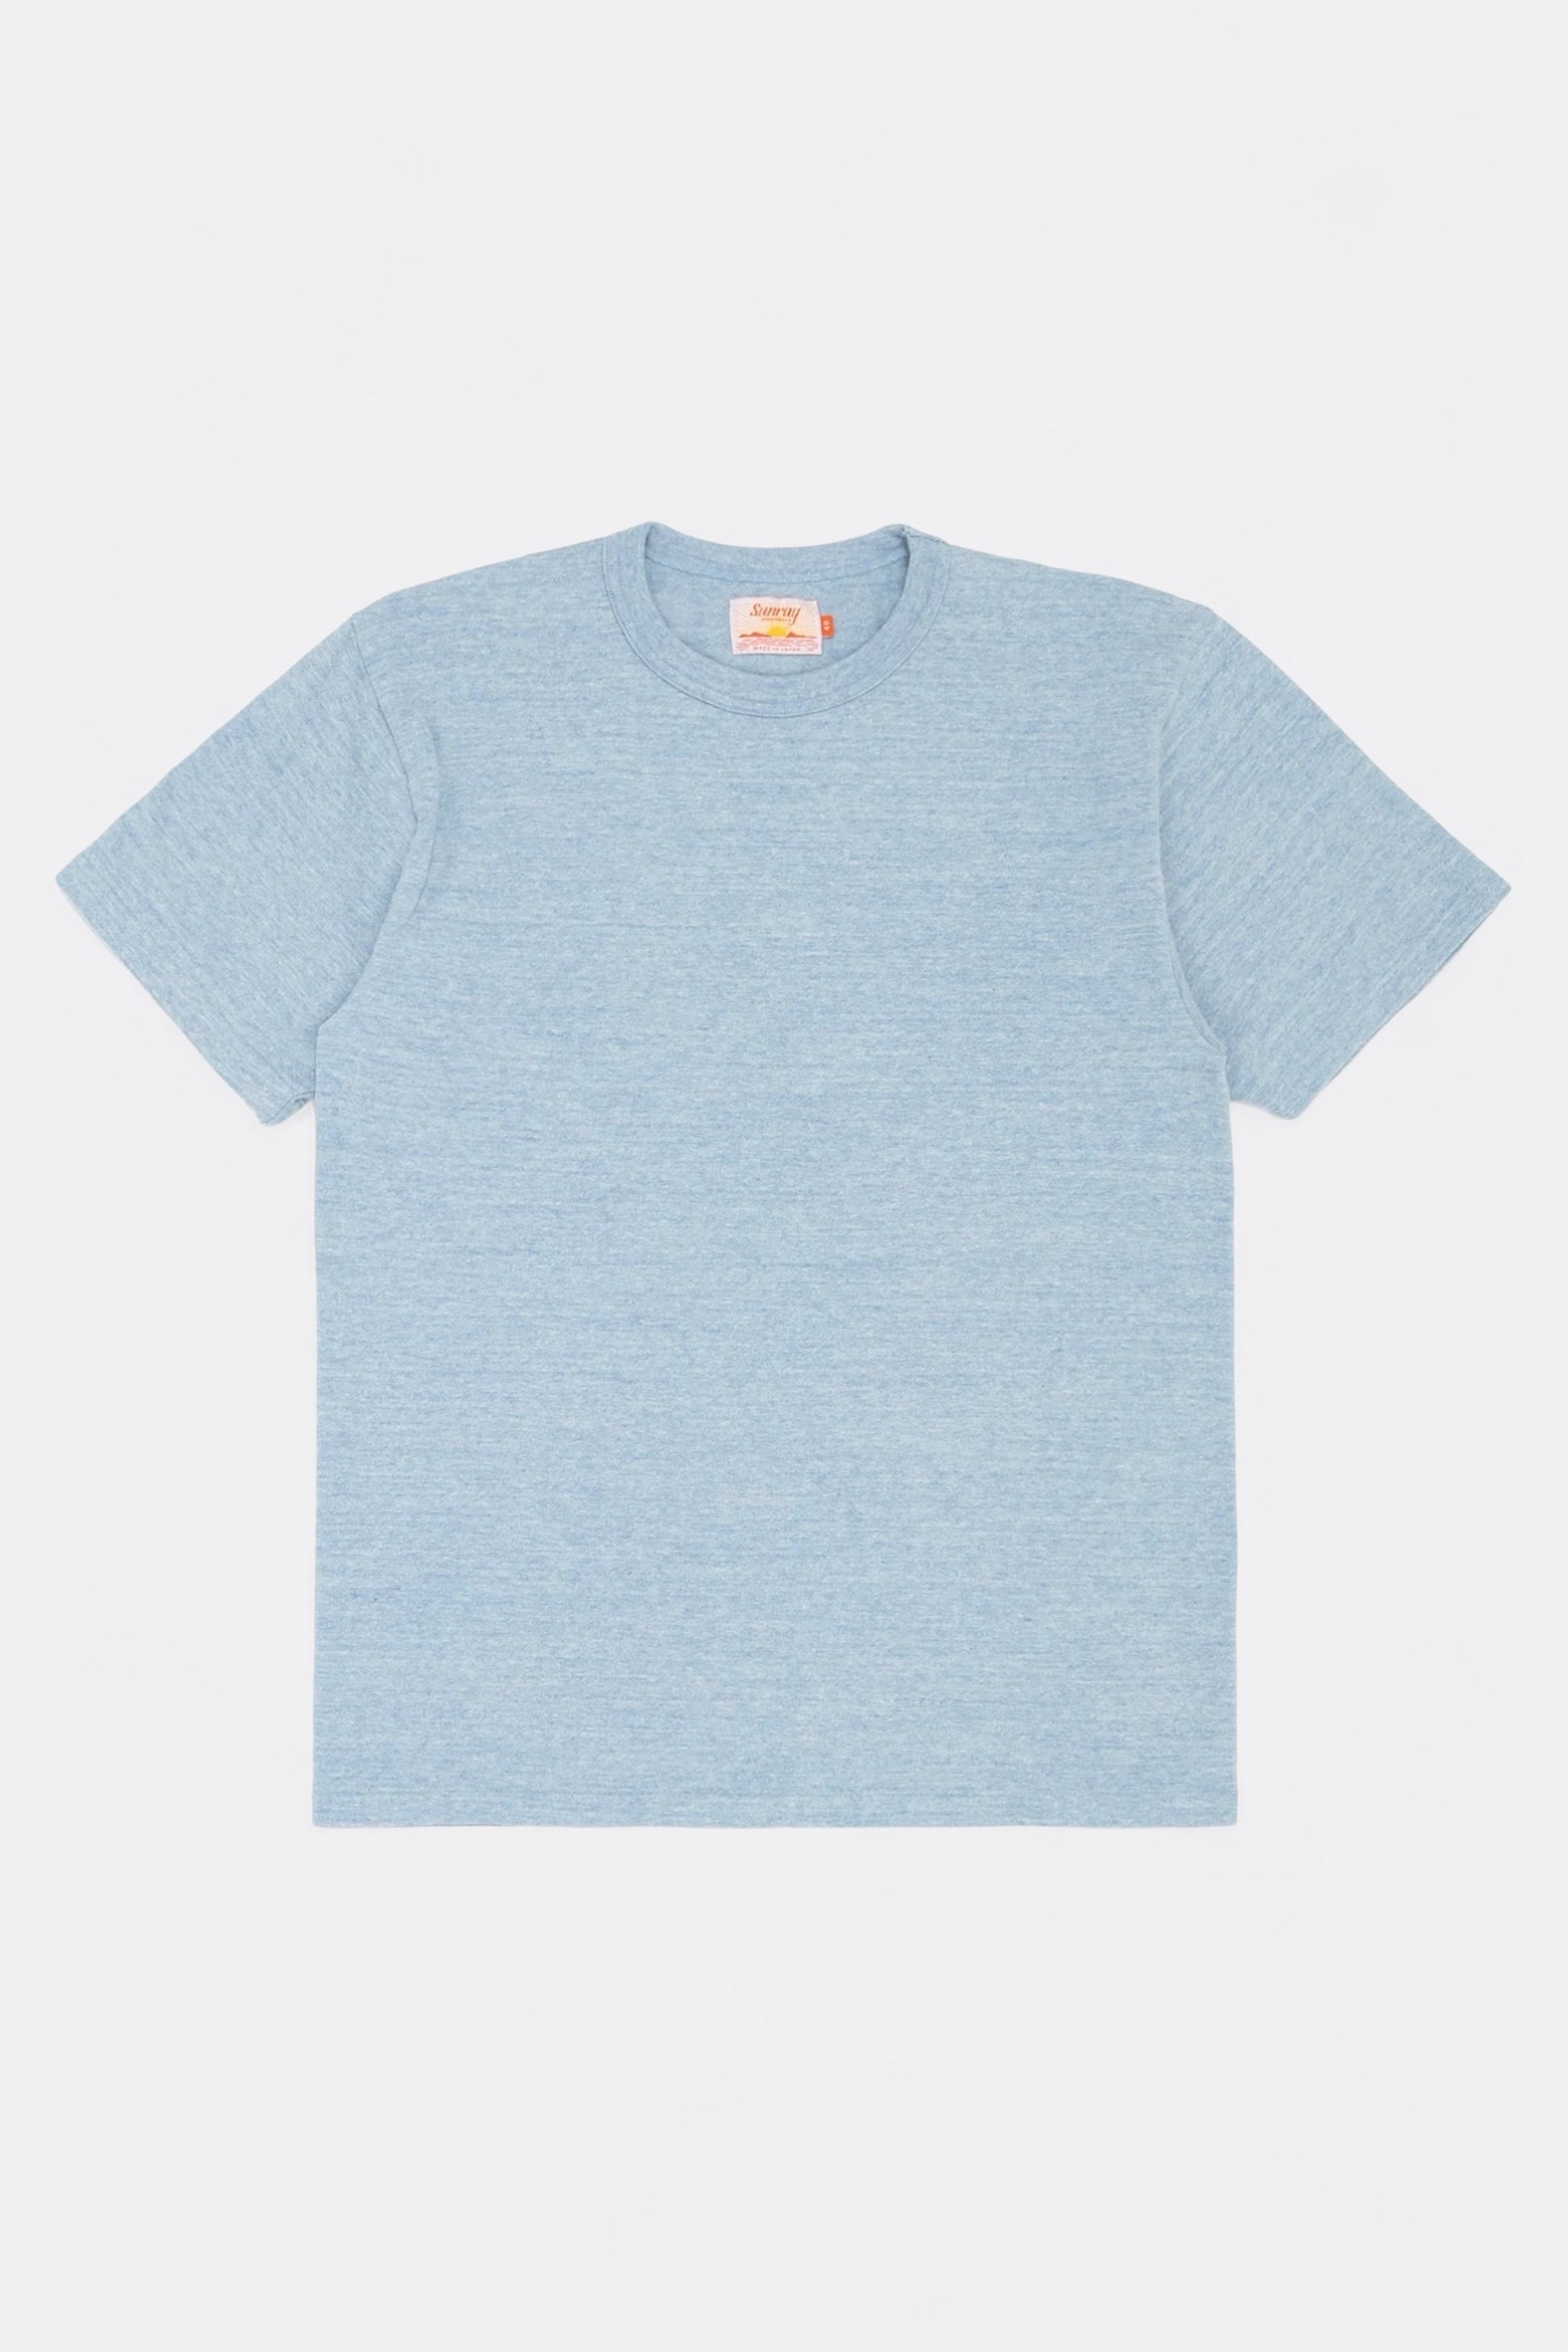 Sunray - Olowalu T-Shirt (Blue Marl)